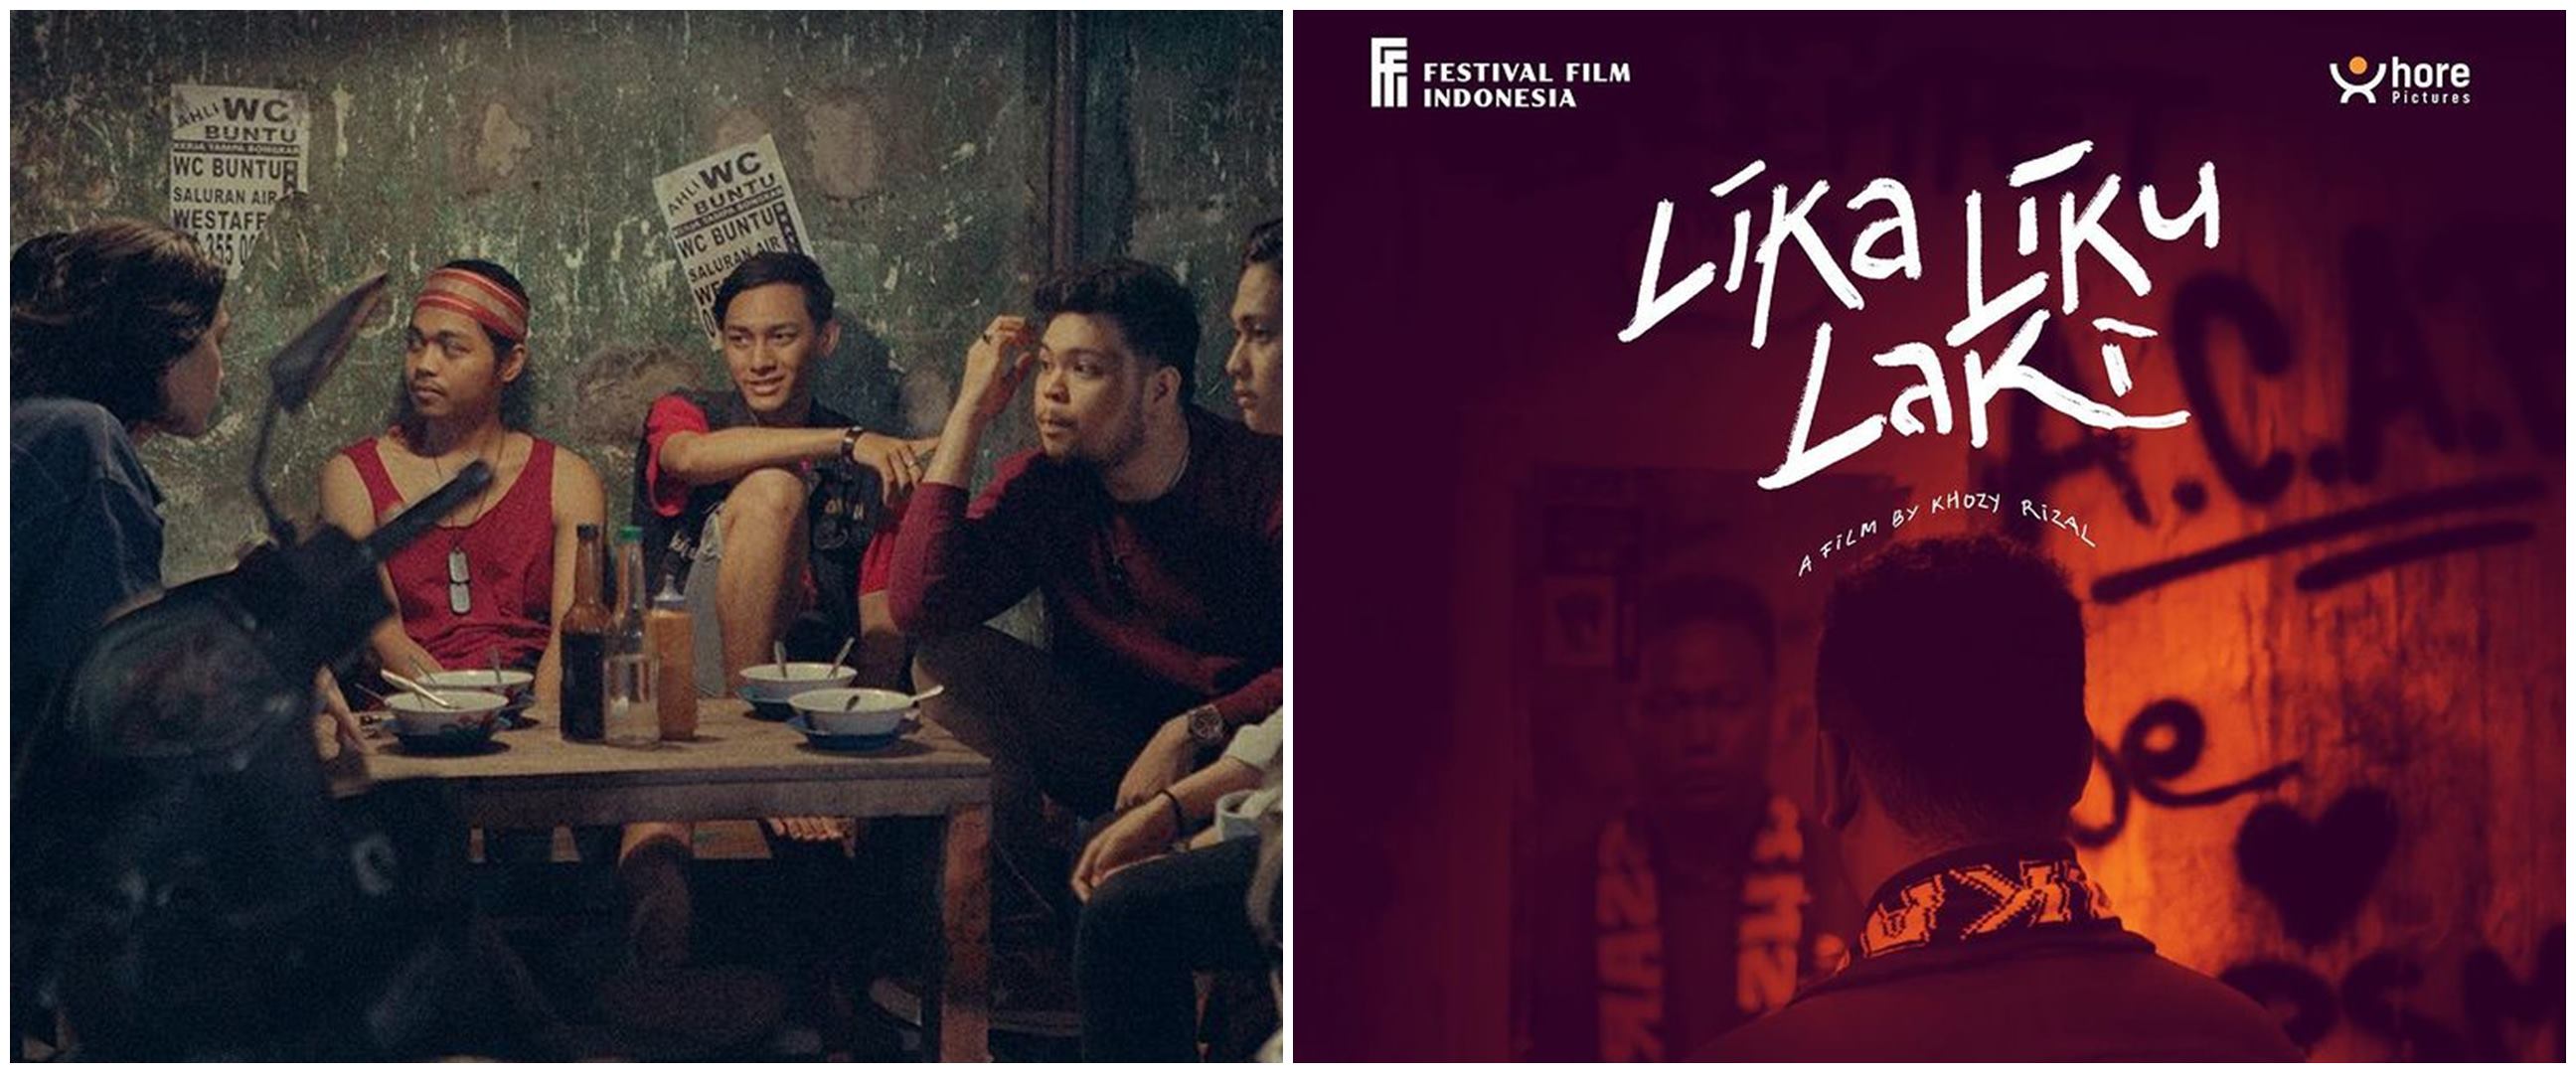 5 Fakta menarik film pendek Lika Liku Laki, sabet banyak penghargaan